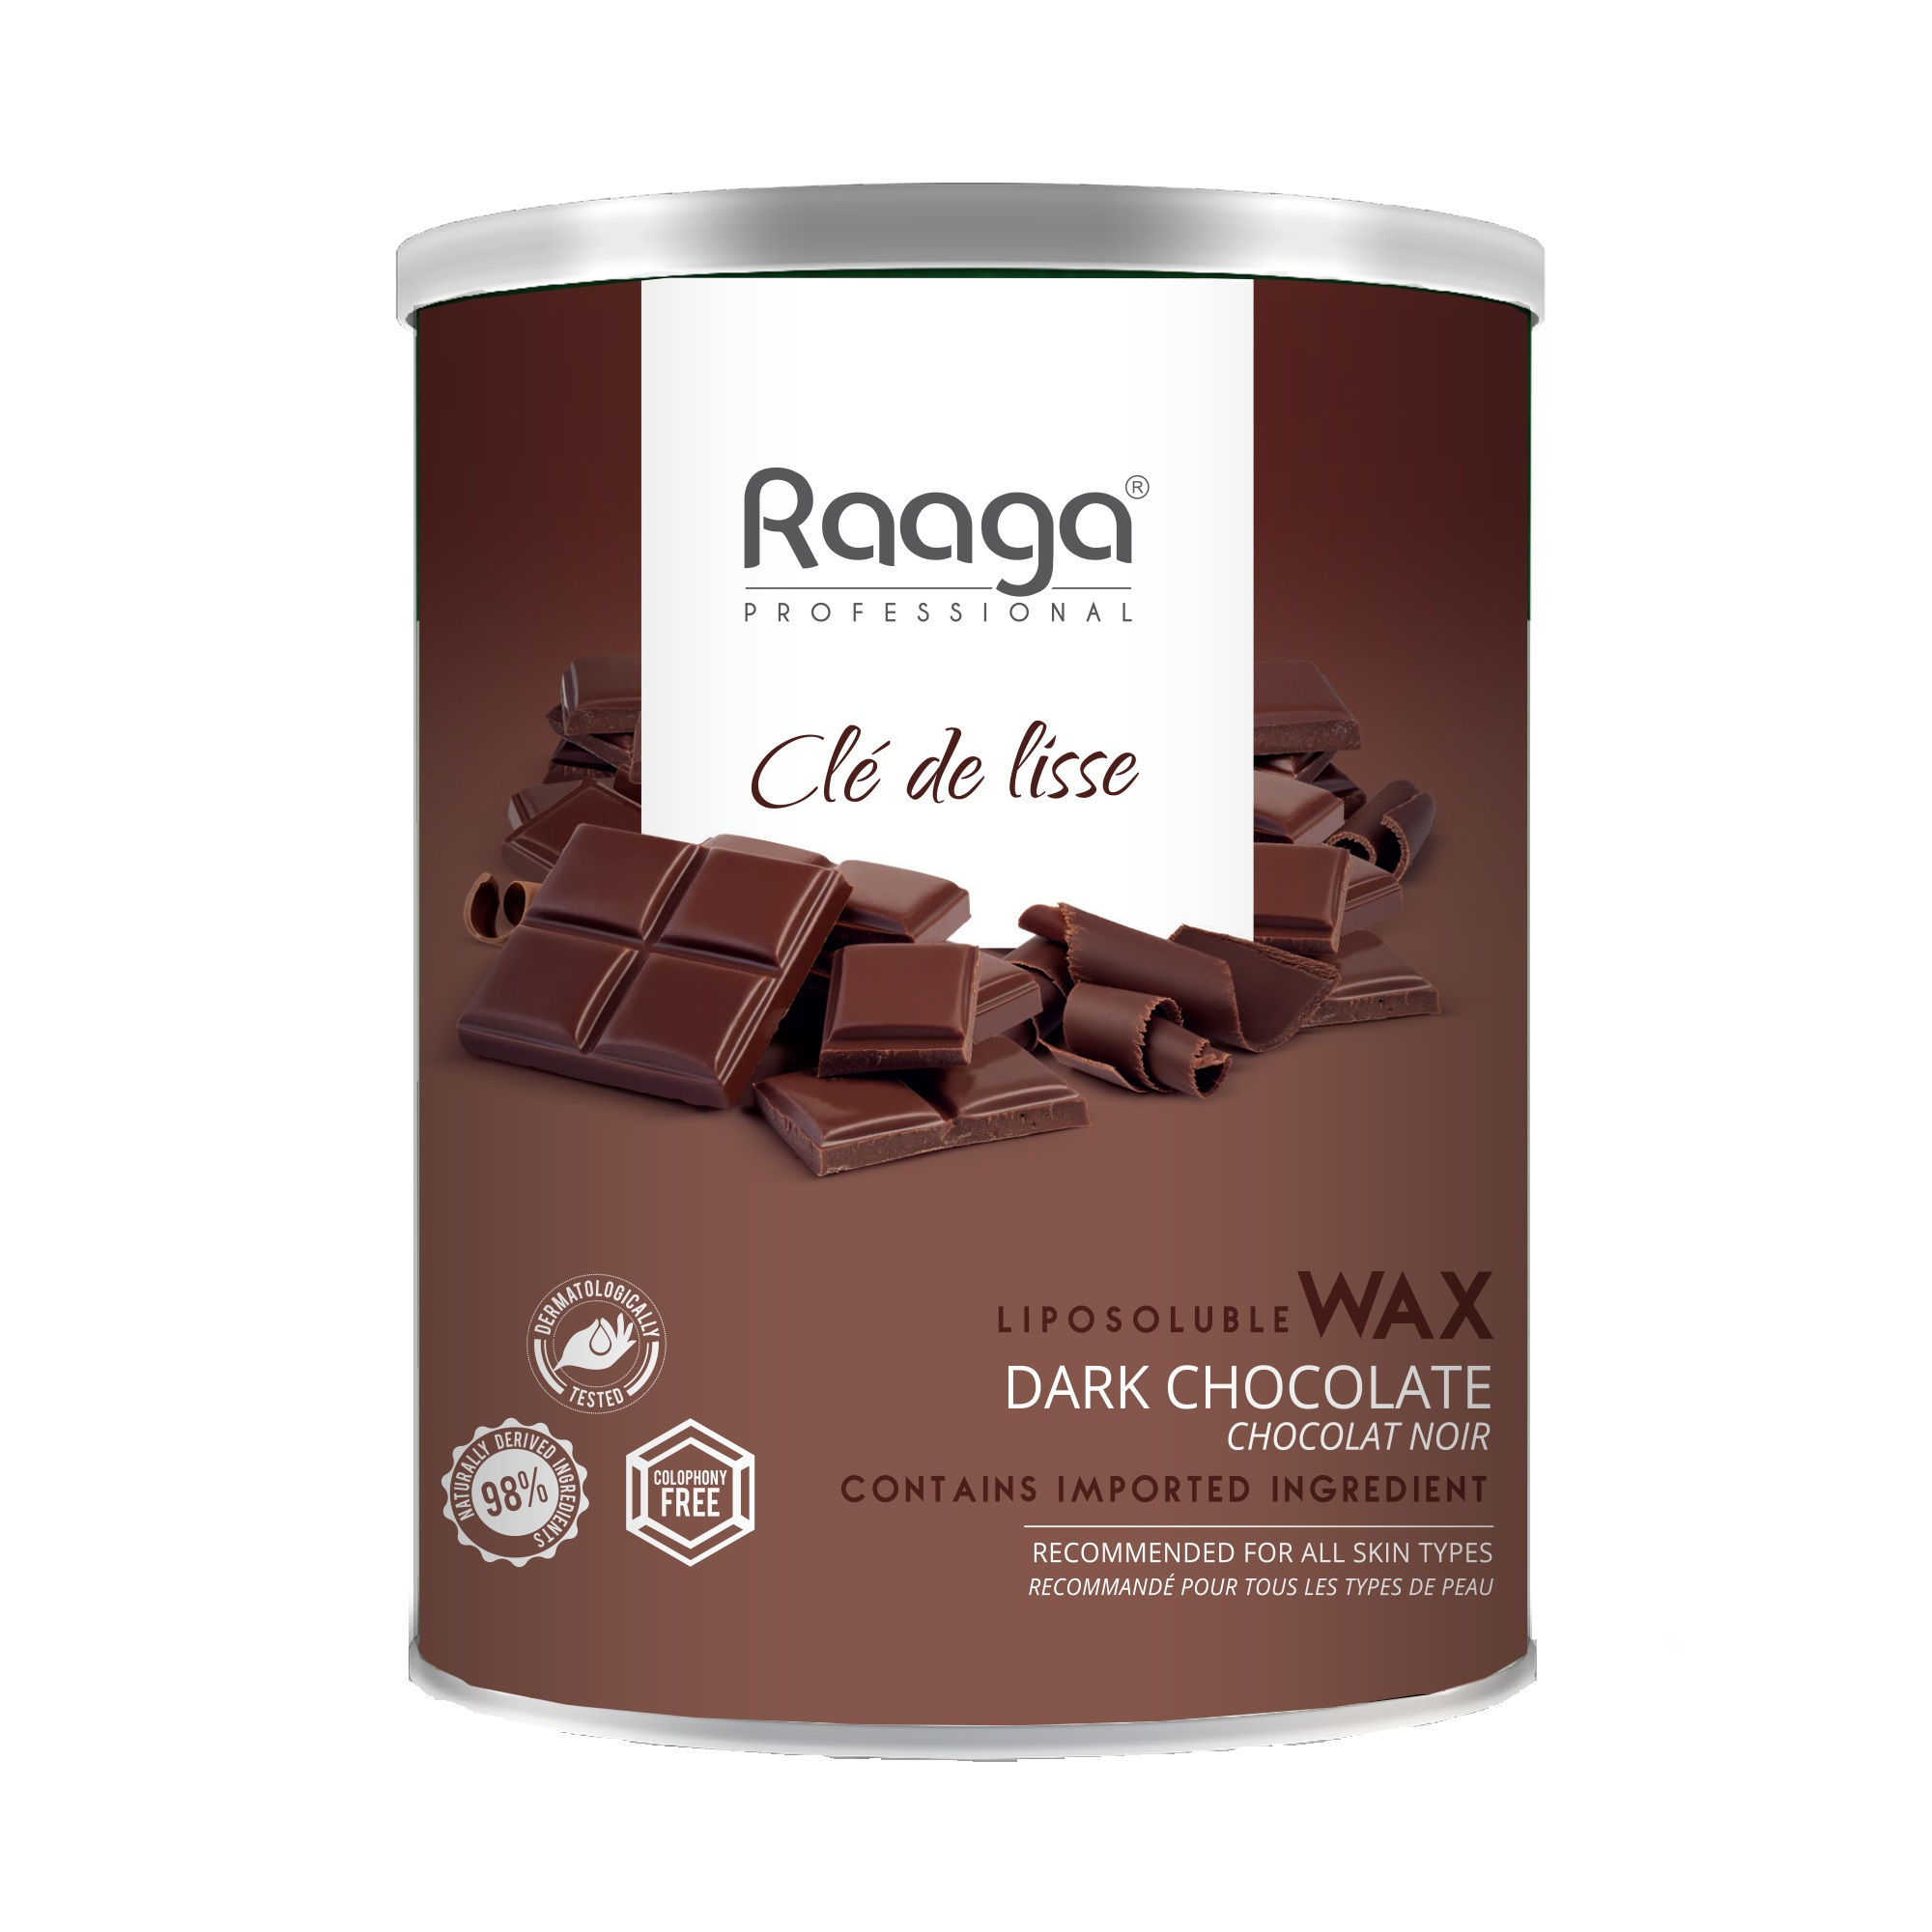 Raaga Professional Liposoluble Wax Dark Chocolate Buy Raaga Professional Liposoluble Wax Dark Chocolate Online At Best Price In India Nykaa raaga professional liposoluble wax dark chocolate